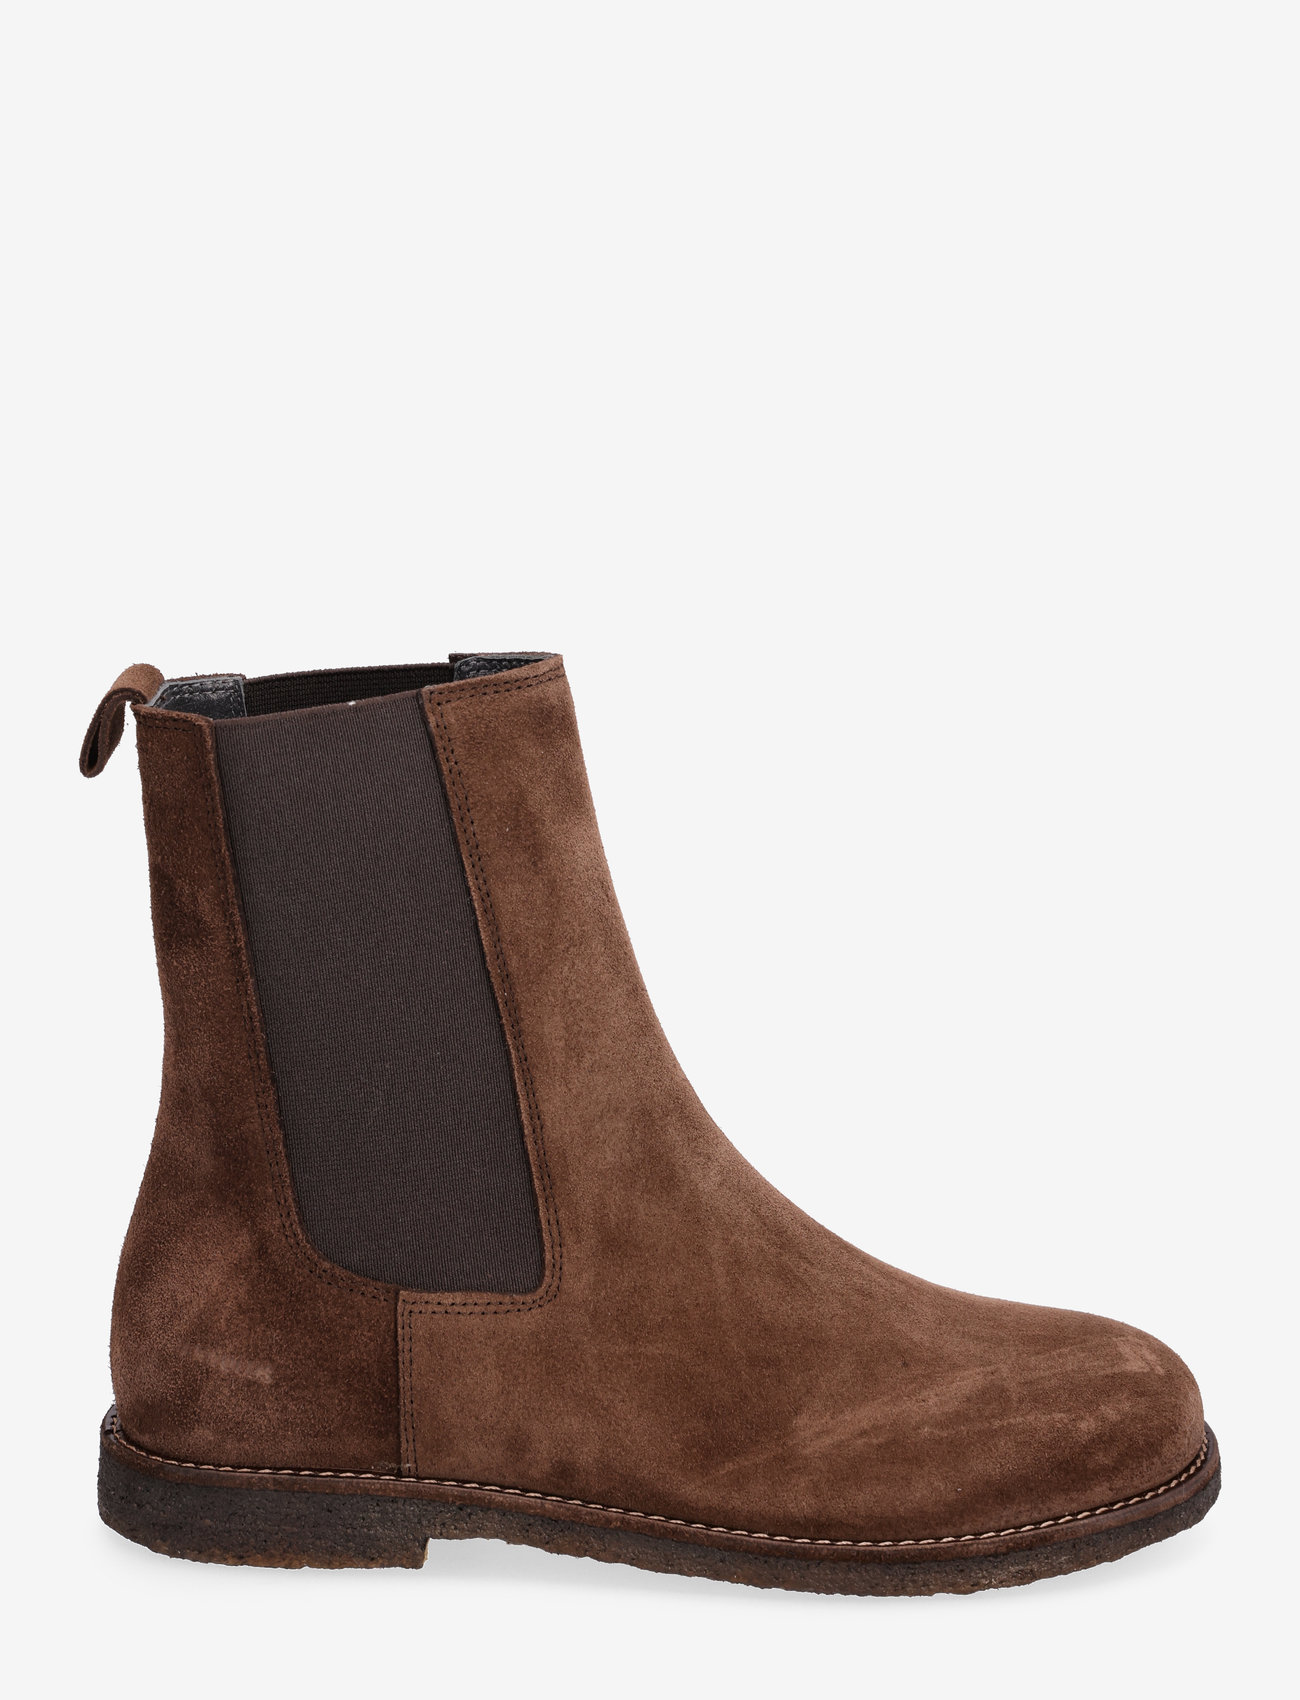 ANGULUS - Boots - flat - chelsea stila zābaki - 1718/002 brown/brown - 1